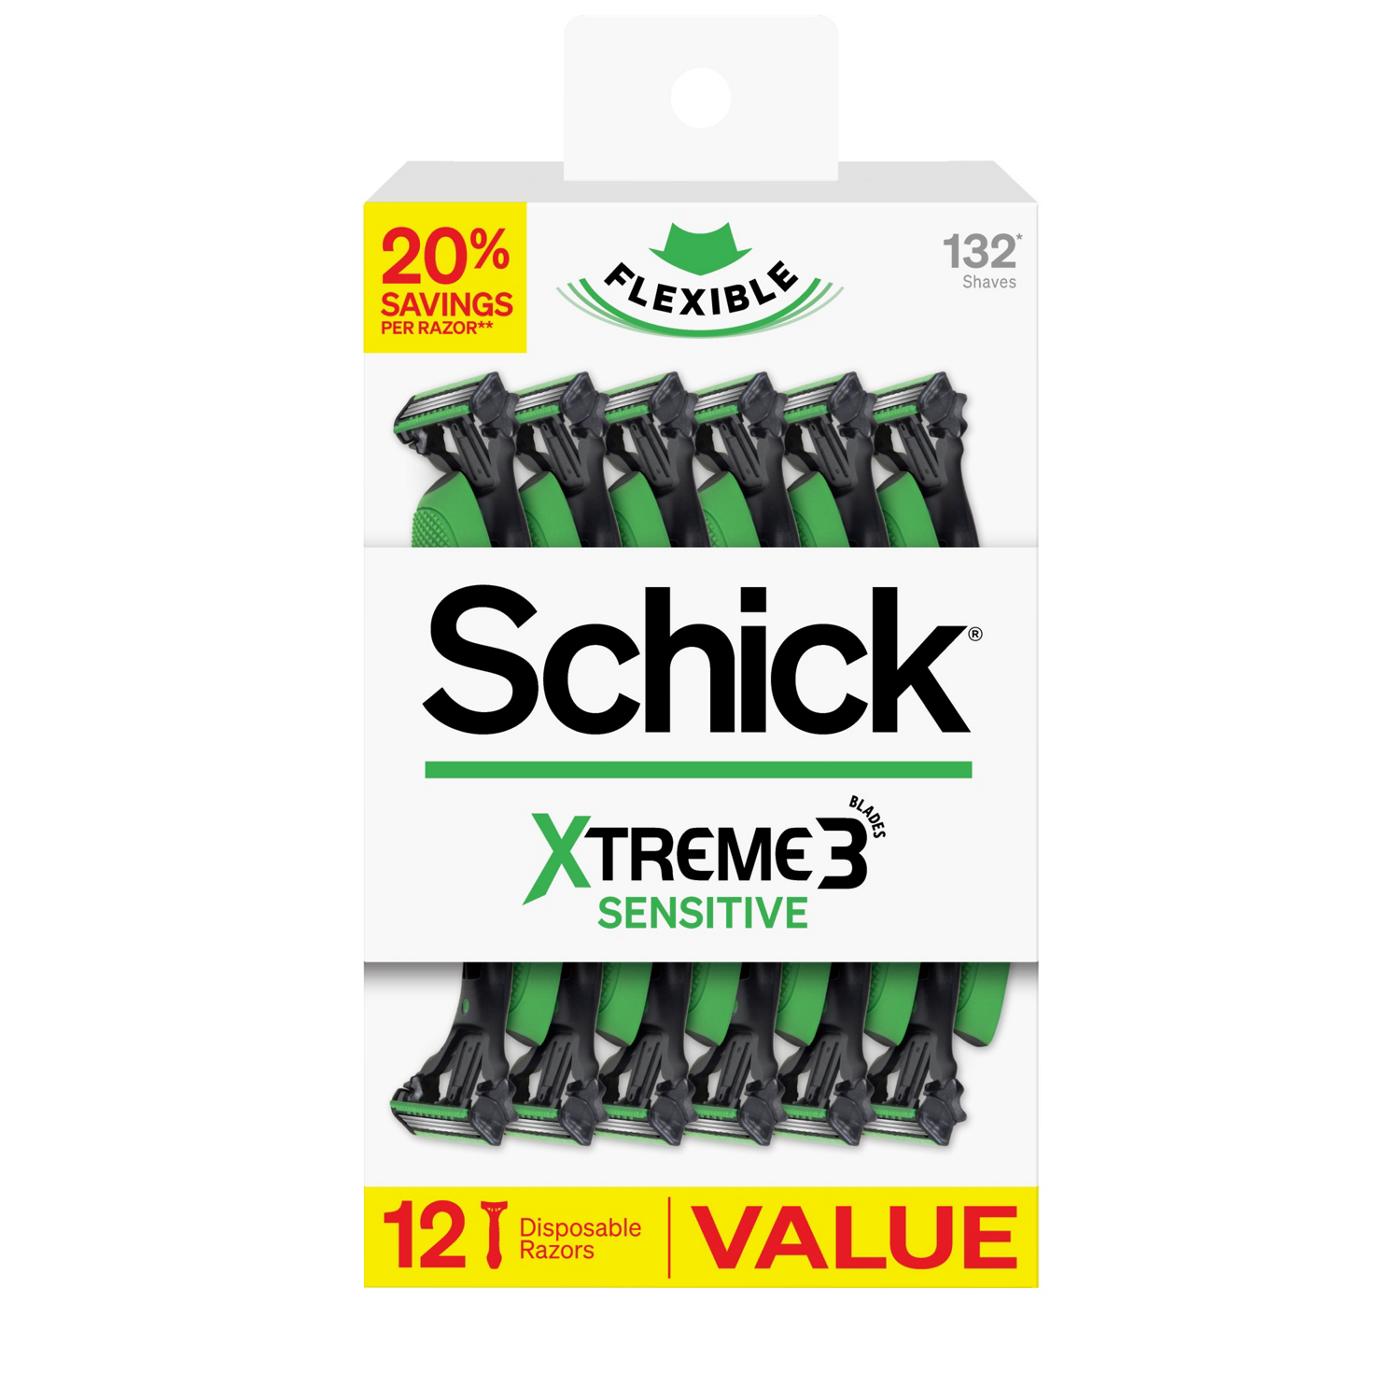 Schick Xtreme 3 Sensitive Disposable Razors; image 1 of 2